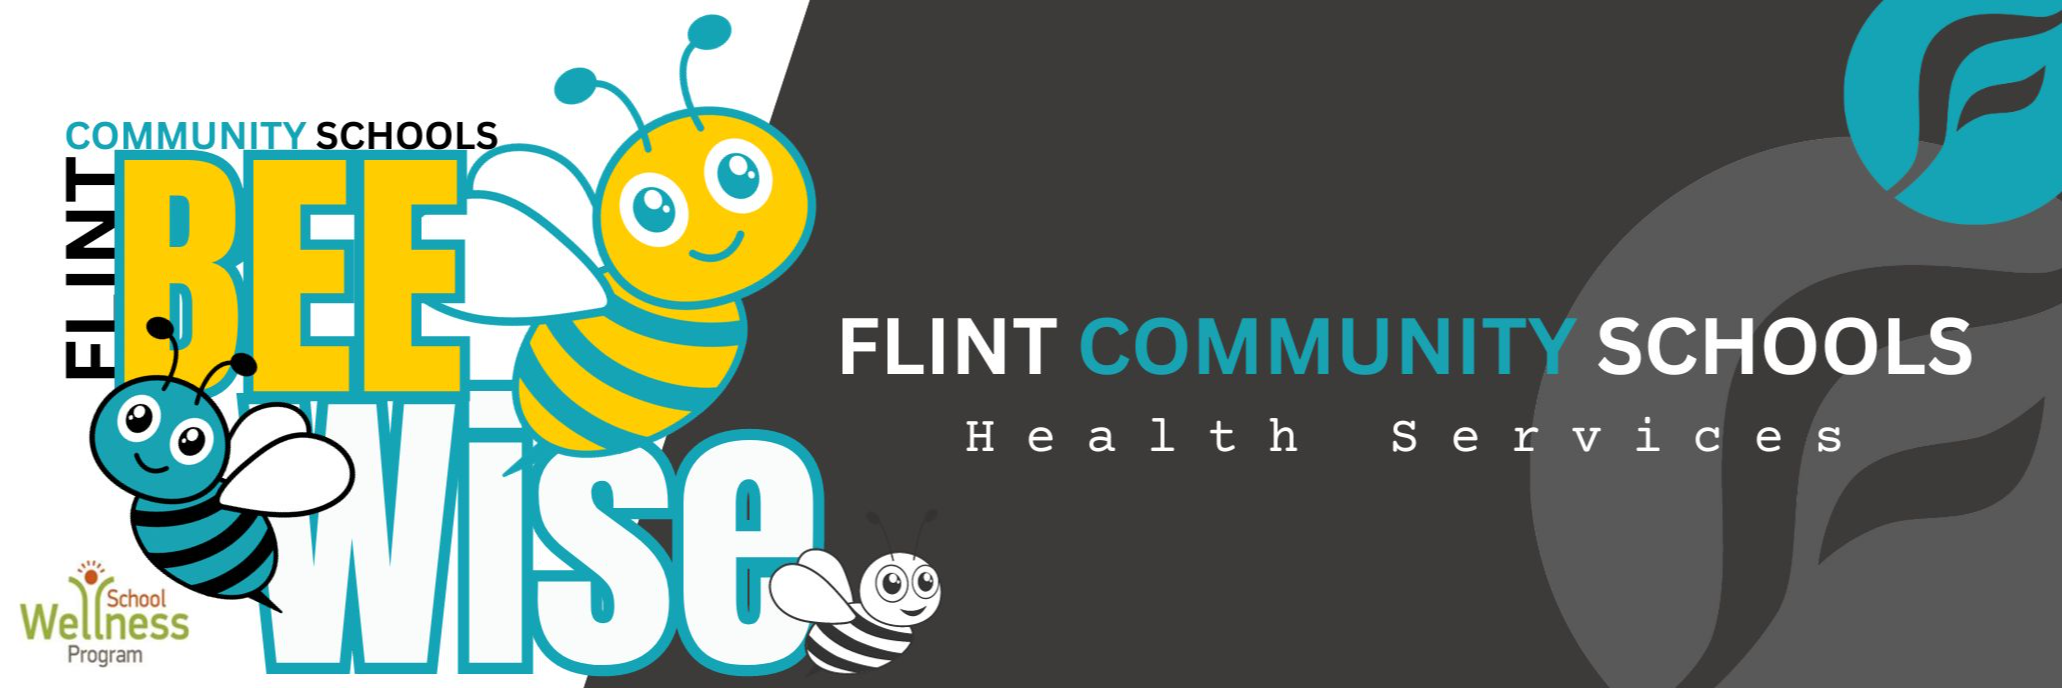 Flint Community Schools Health Services Banner